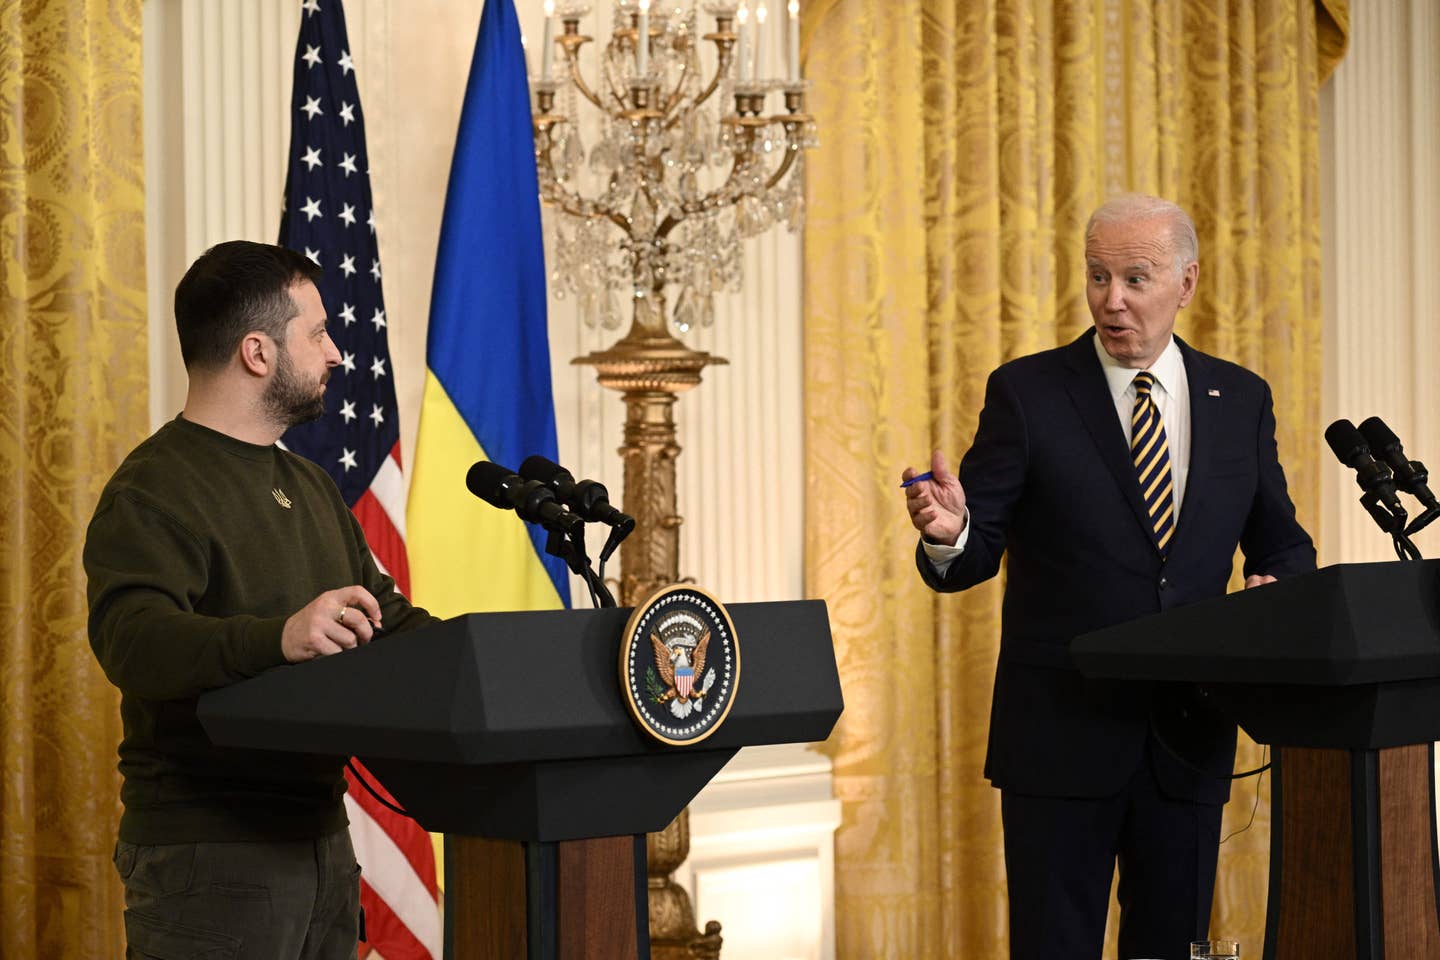 On Dec. 21, 2022, U.S. President Joe Biden promised Ukrainian President Volodymyr Zelensky that the U.S. would provide a Patriot air defense system to his country. (Photo by Brendan SMIALOWSKI / AFP) (Photo by BRENDAN SMIALOWSKI/AFP via Getty Images)